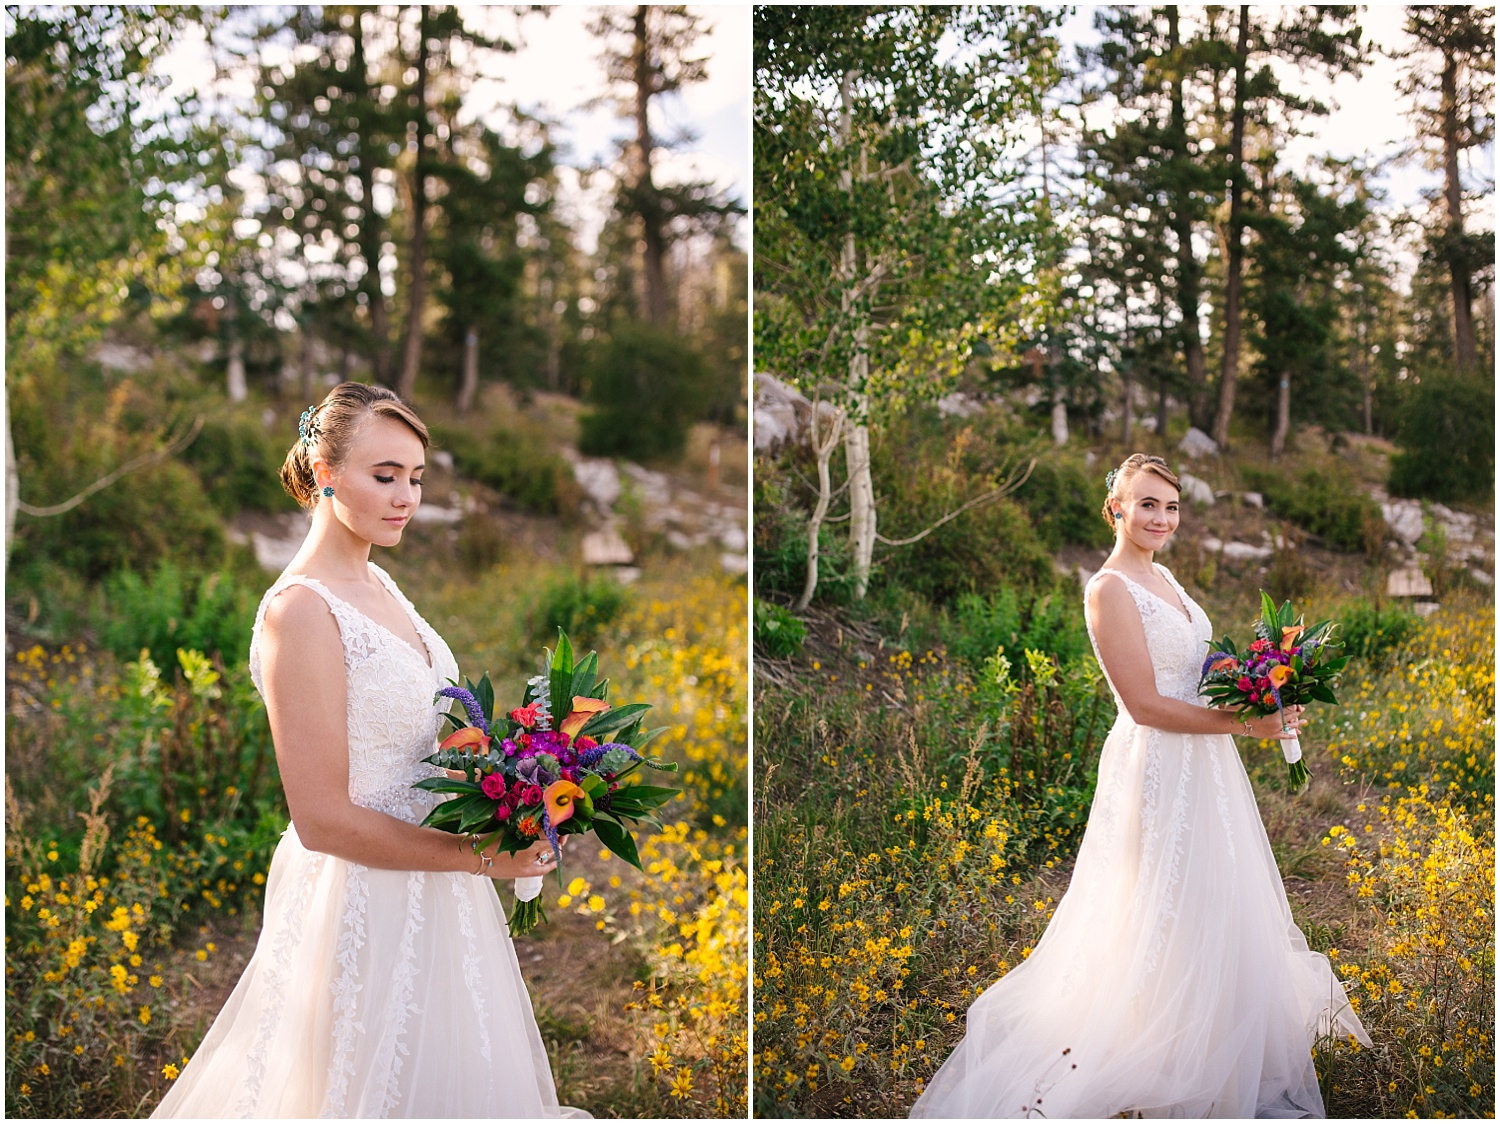 Summer bridal portraits in the Sandia Mountains for Albuquerque elopement